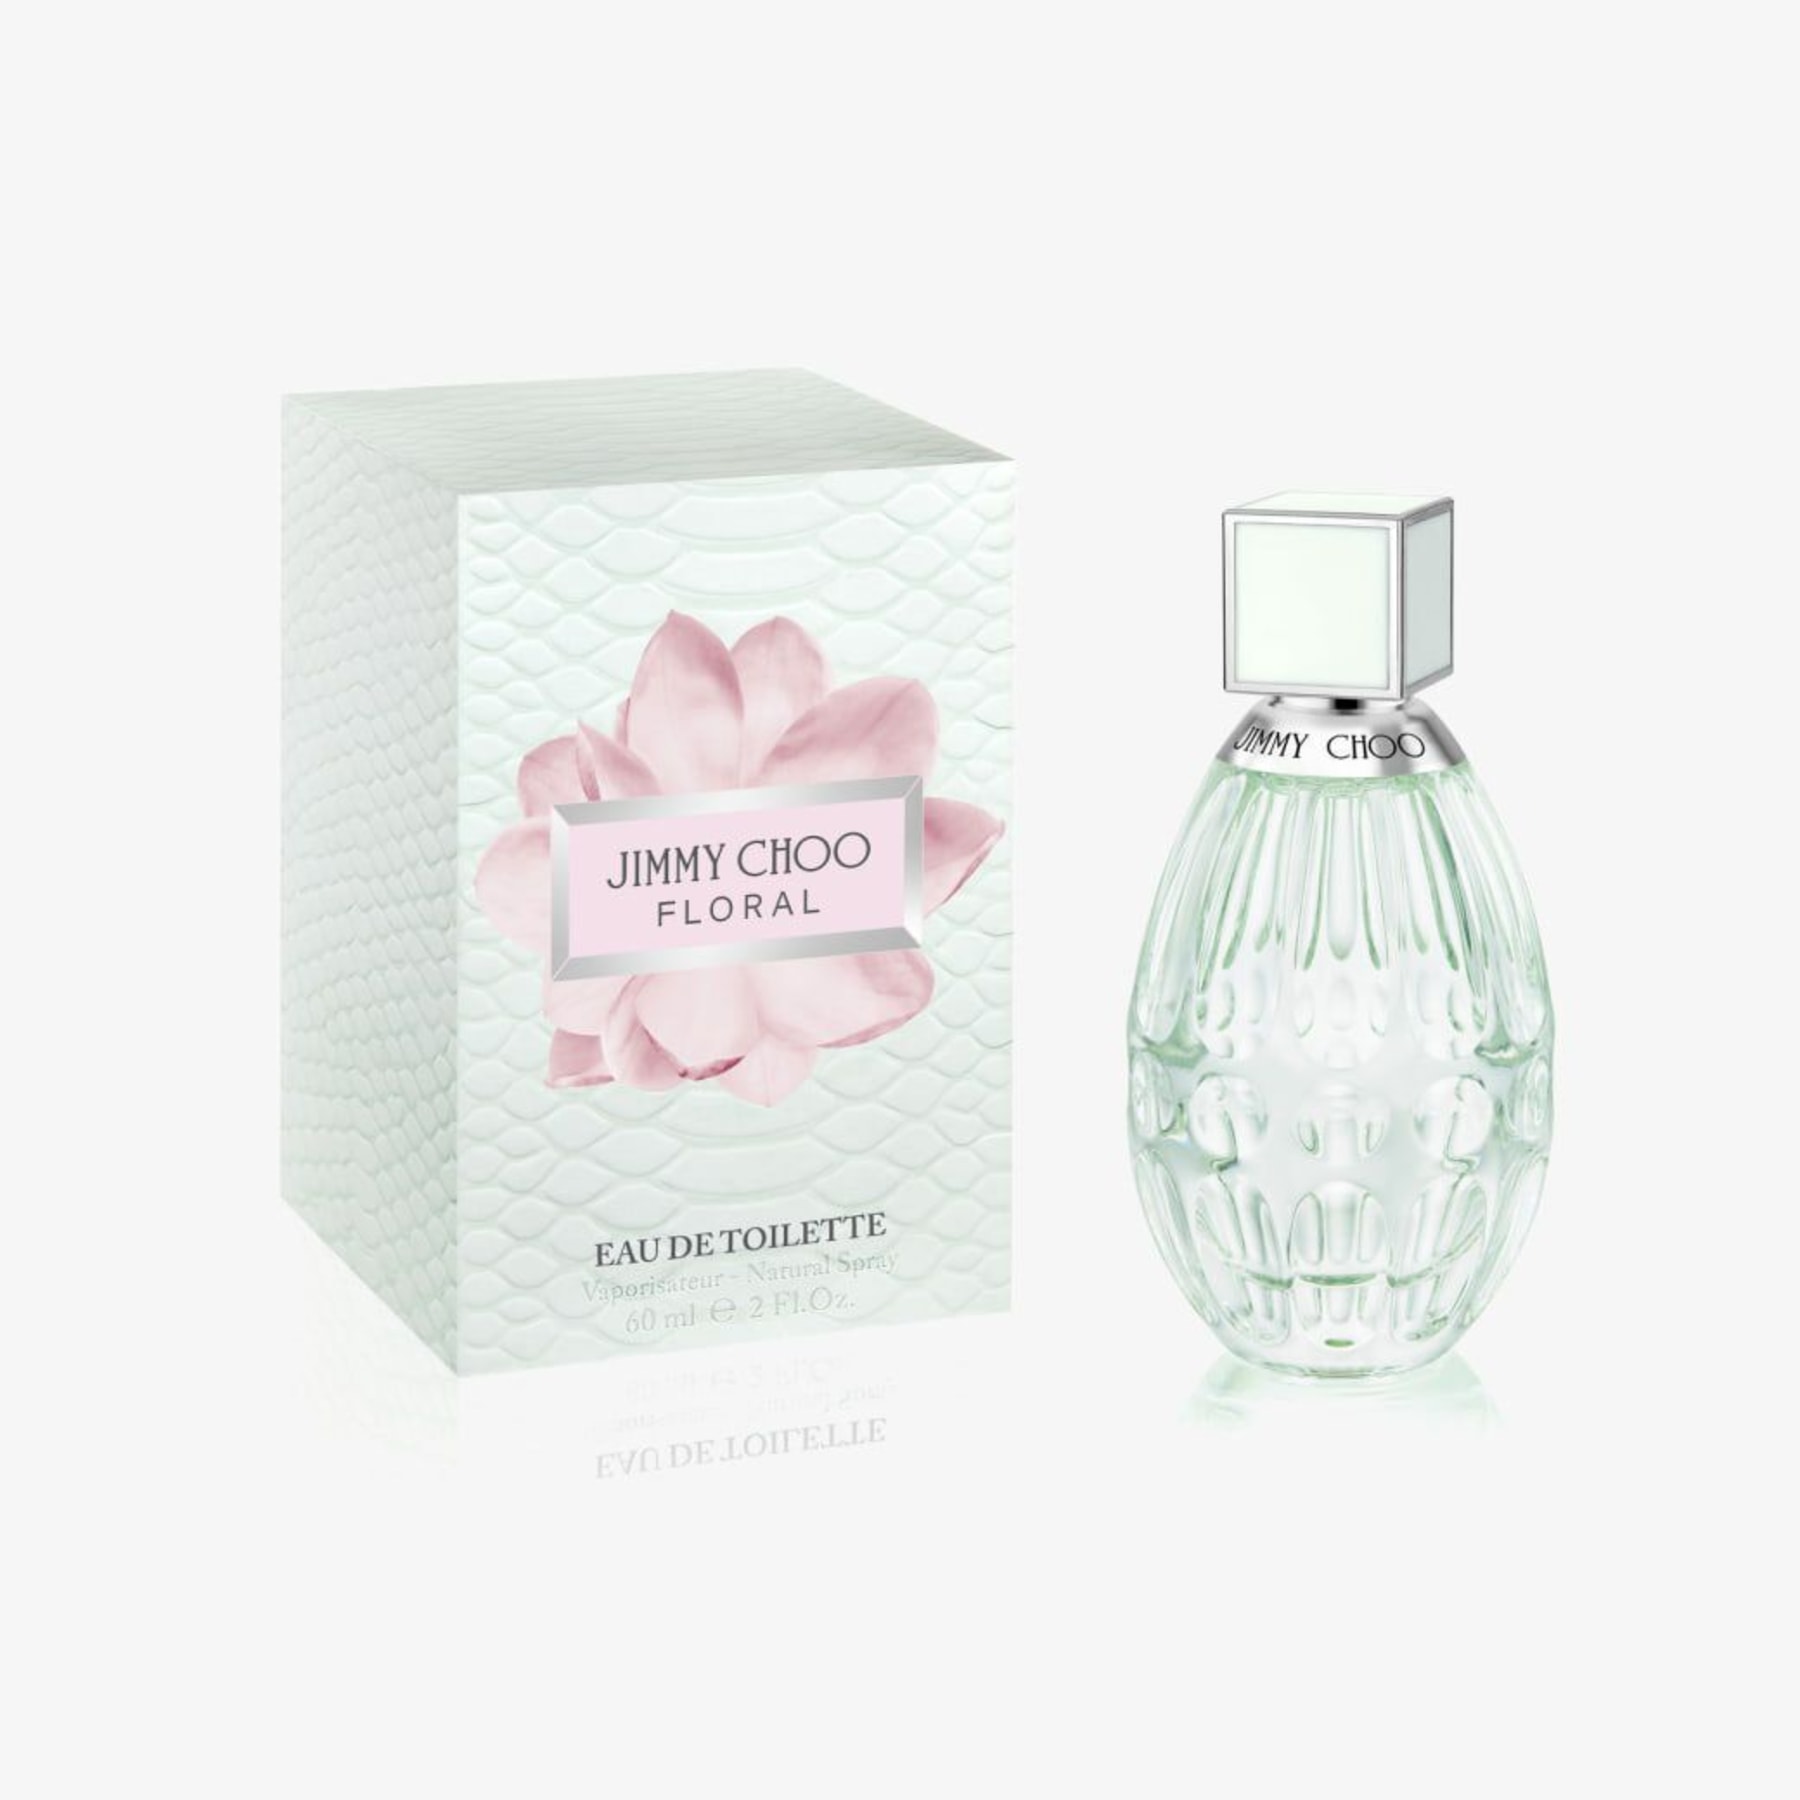 Fragrance 60ml | | Choo FLORAL CHOO JIMMY Jimmy